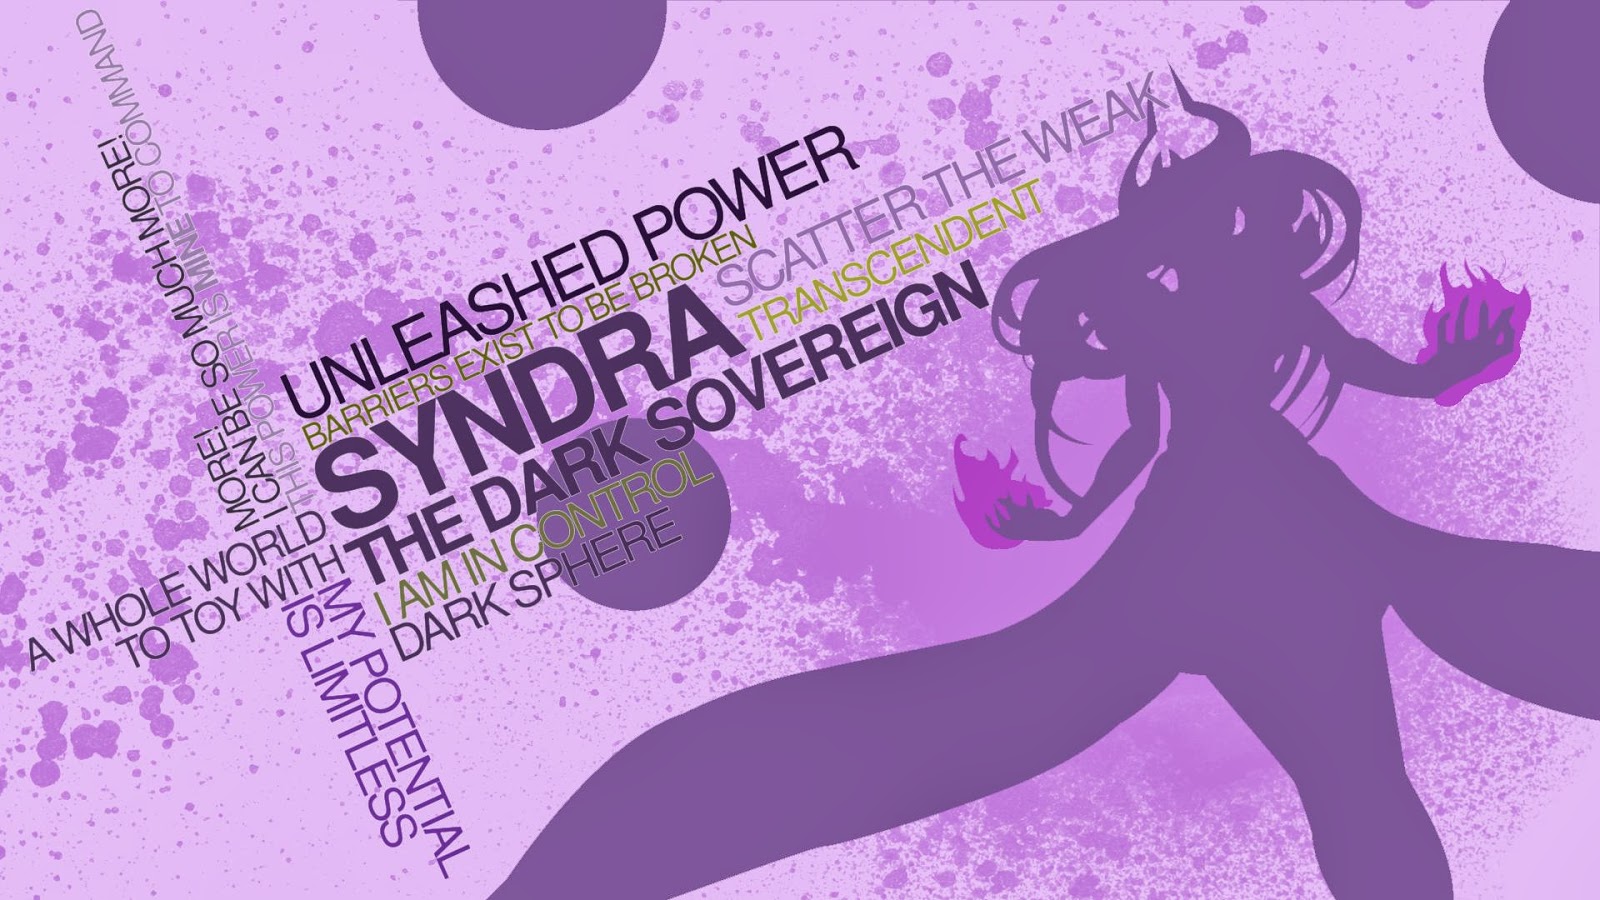 League Of Legends Syndra Wallpaper